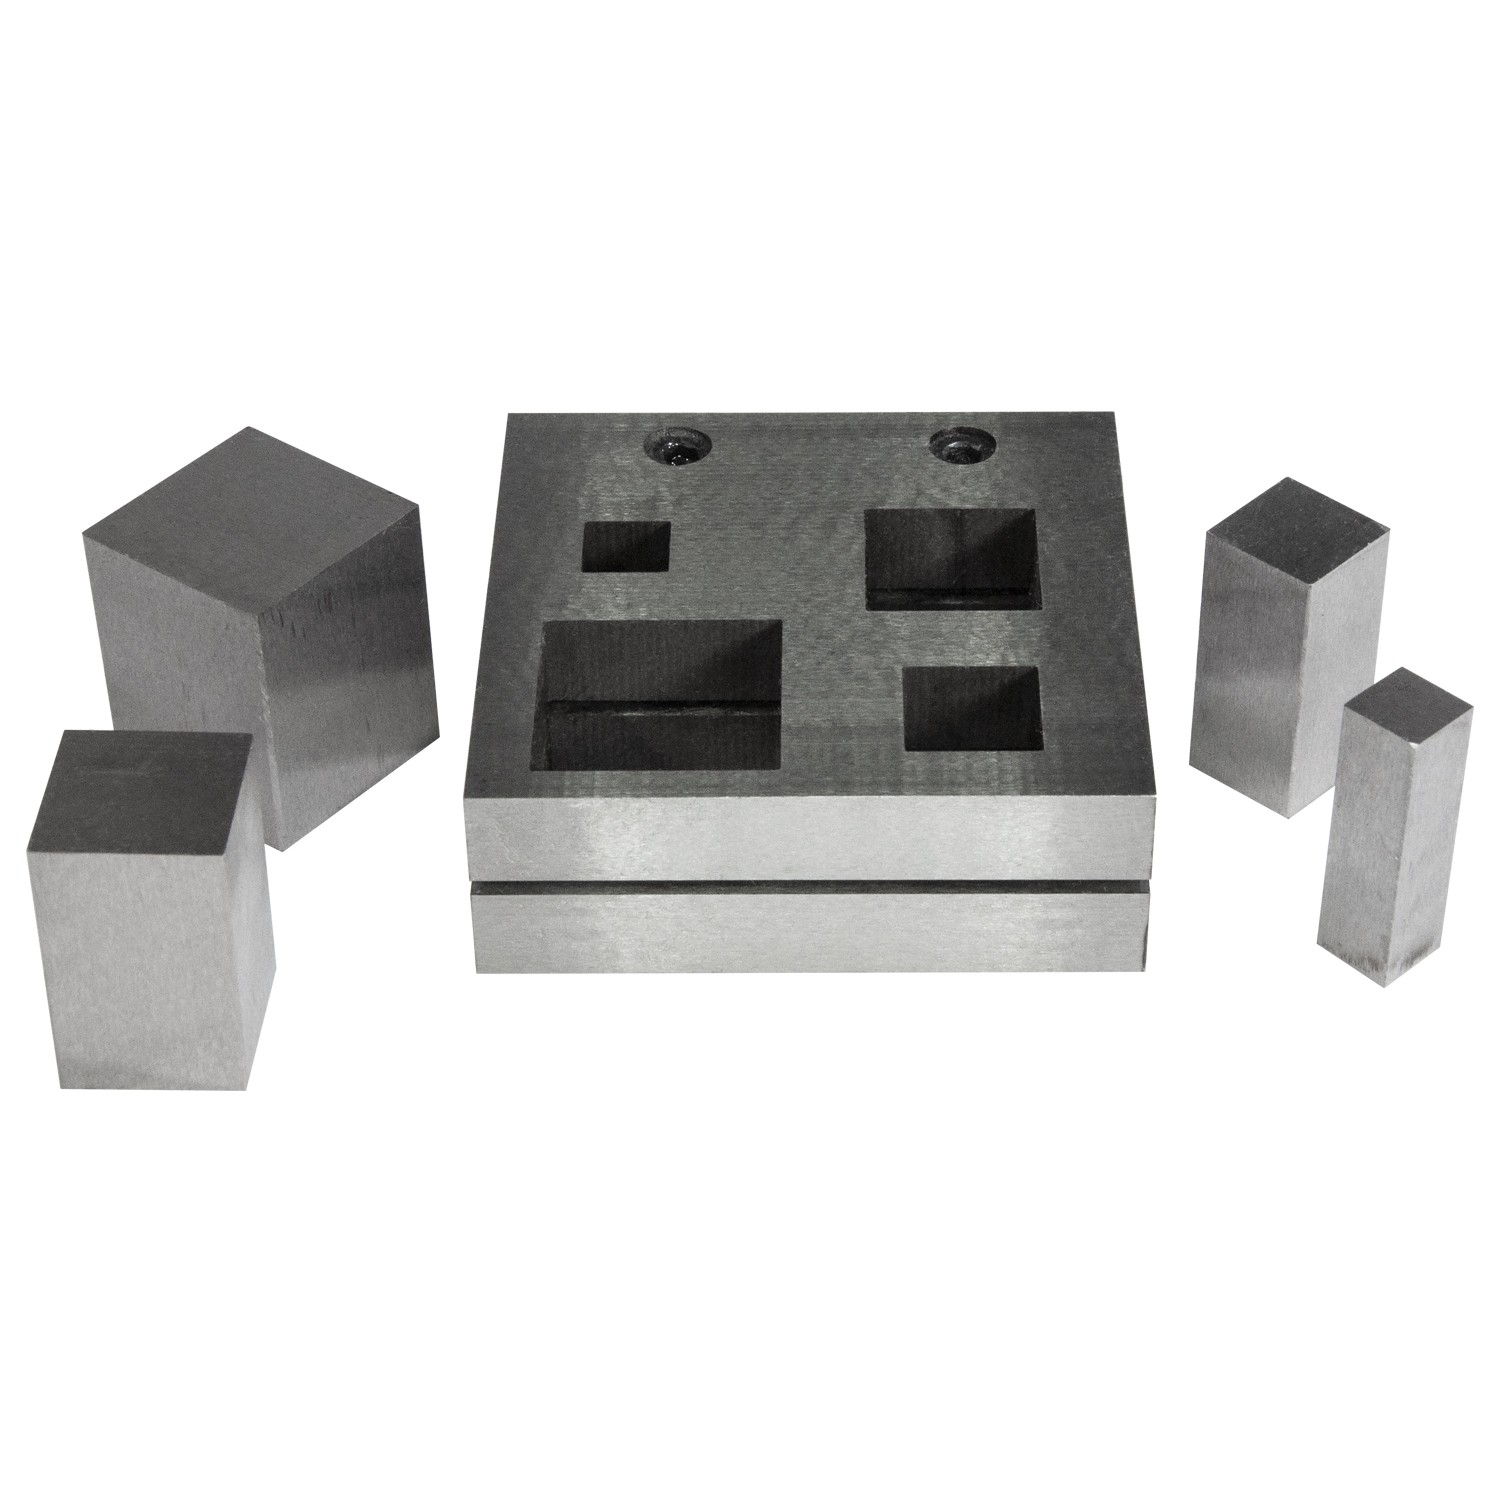 4-Piece Square Steel Disc Cutter Set